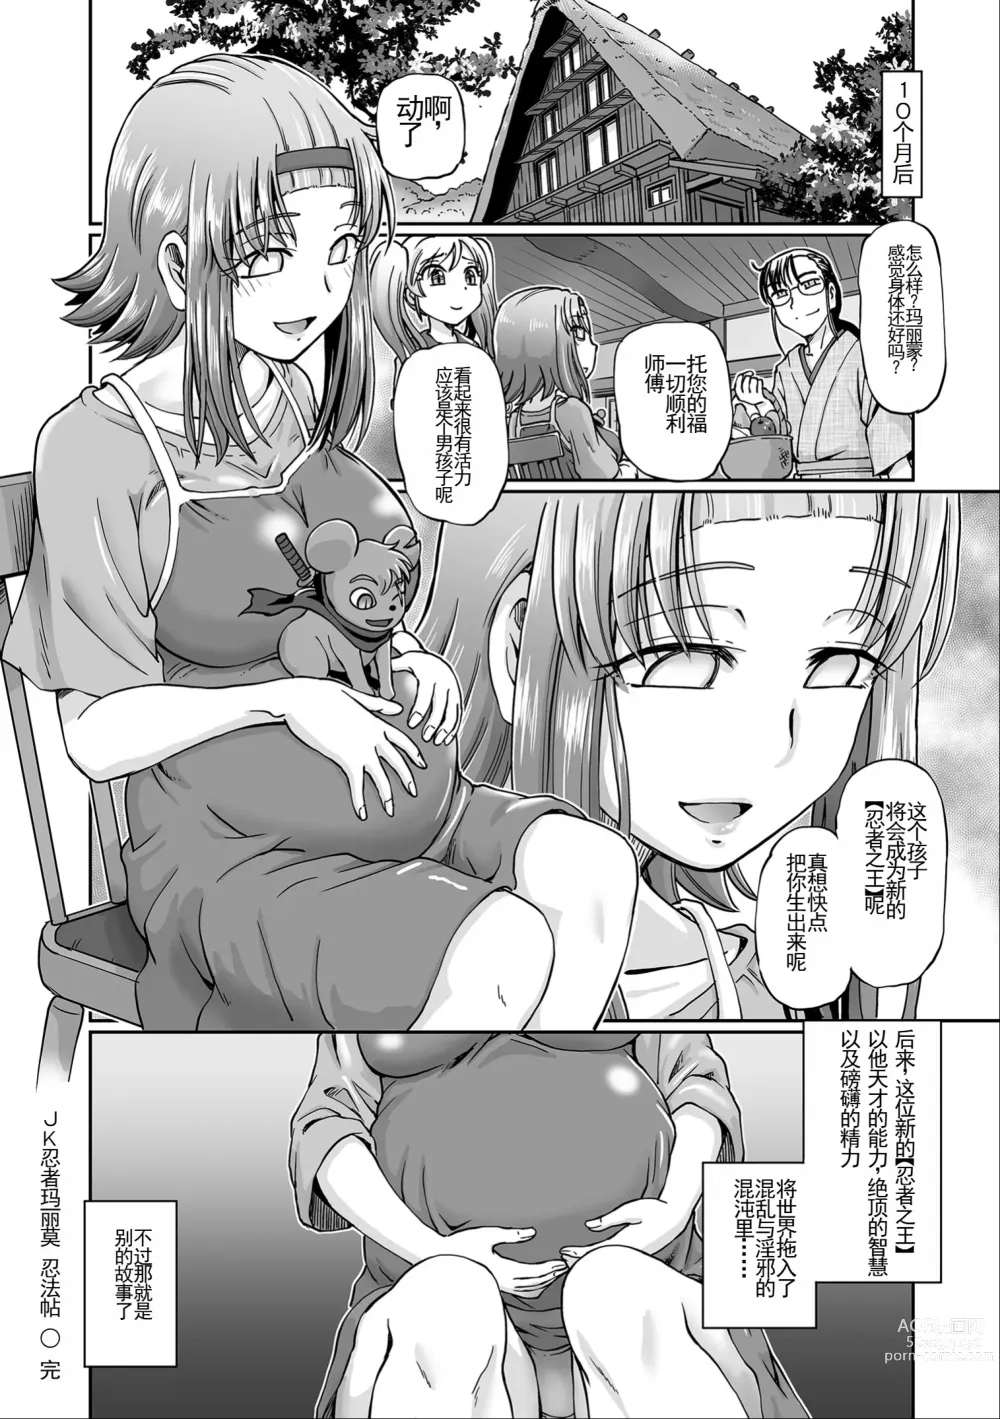 Page 191 of manga JK Ninja Marimo Ninpouchou